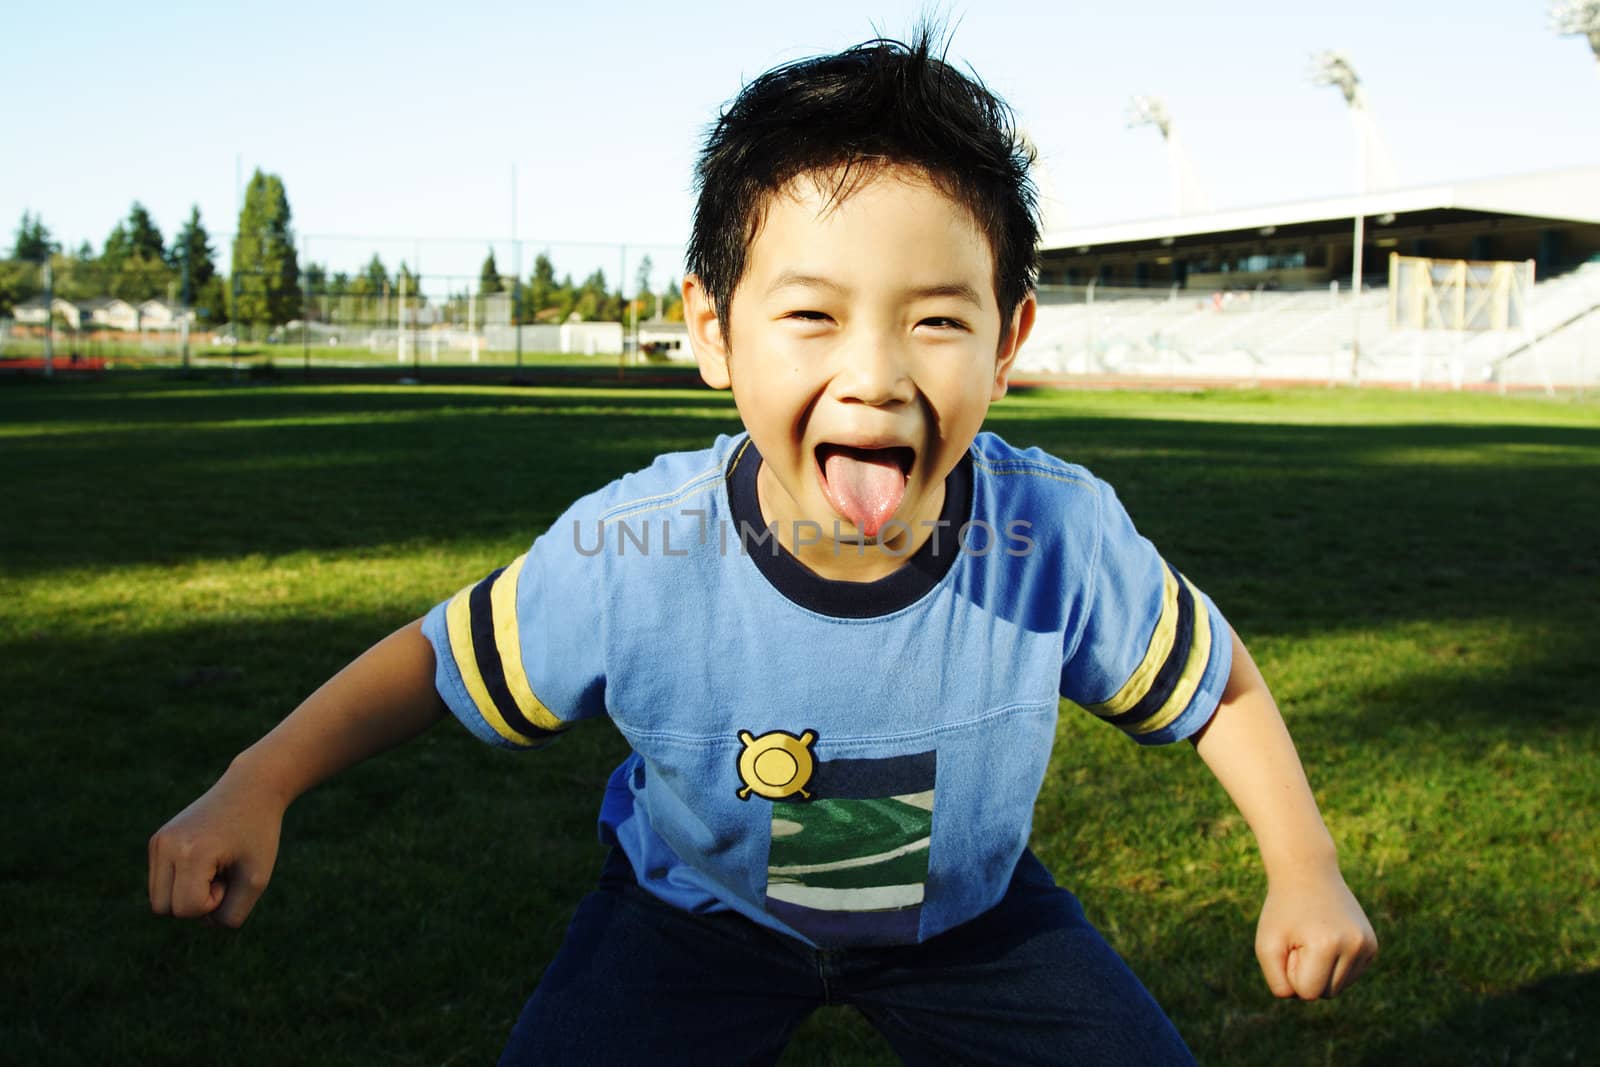 Funny boy by aremafoto